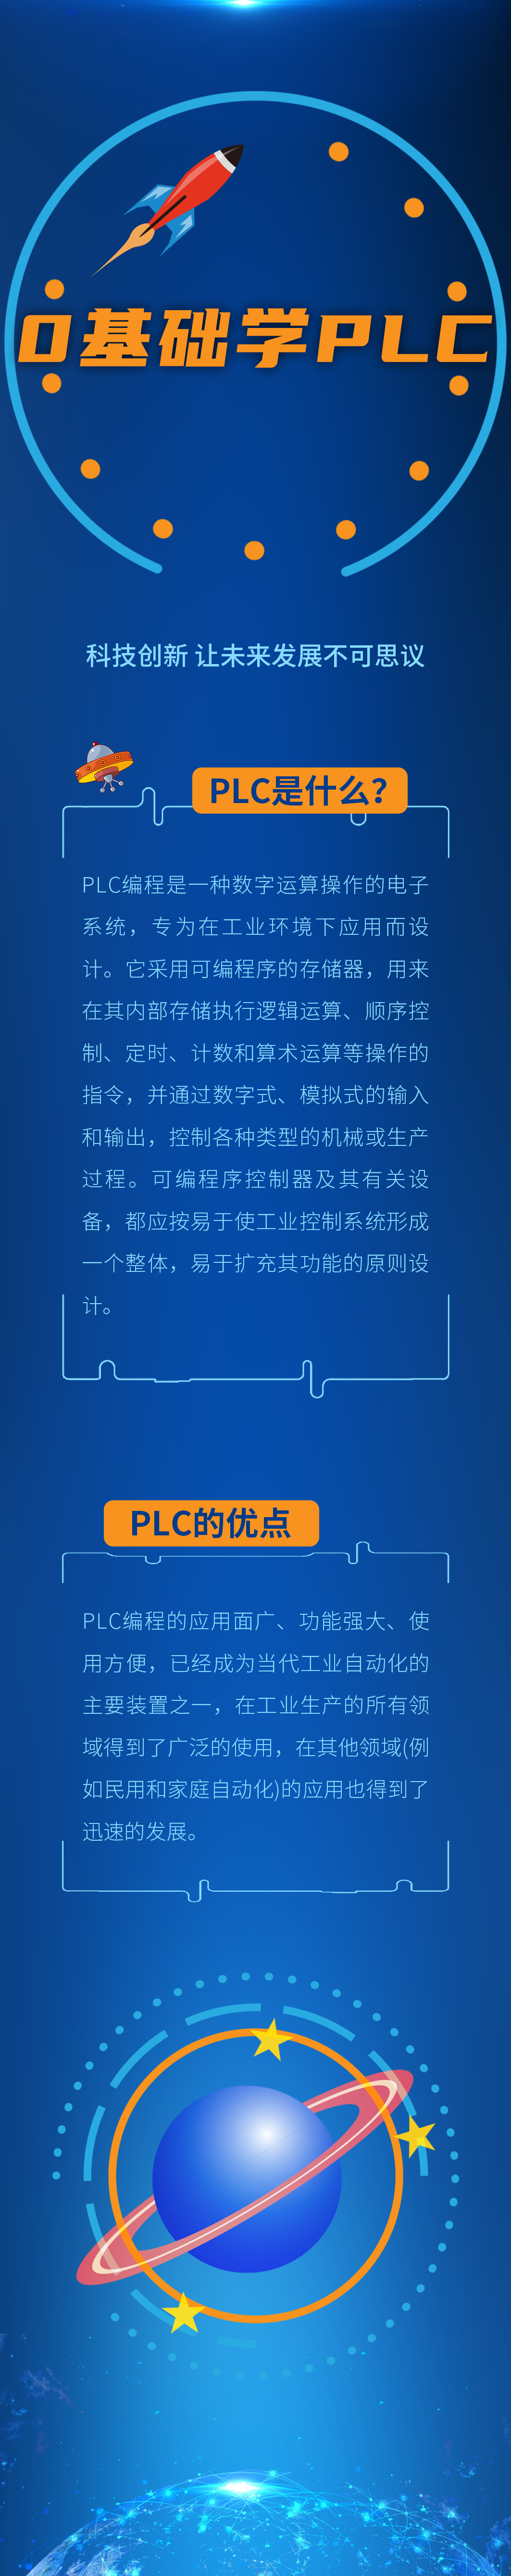 PLC.png